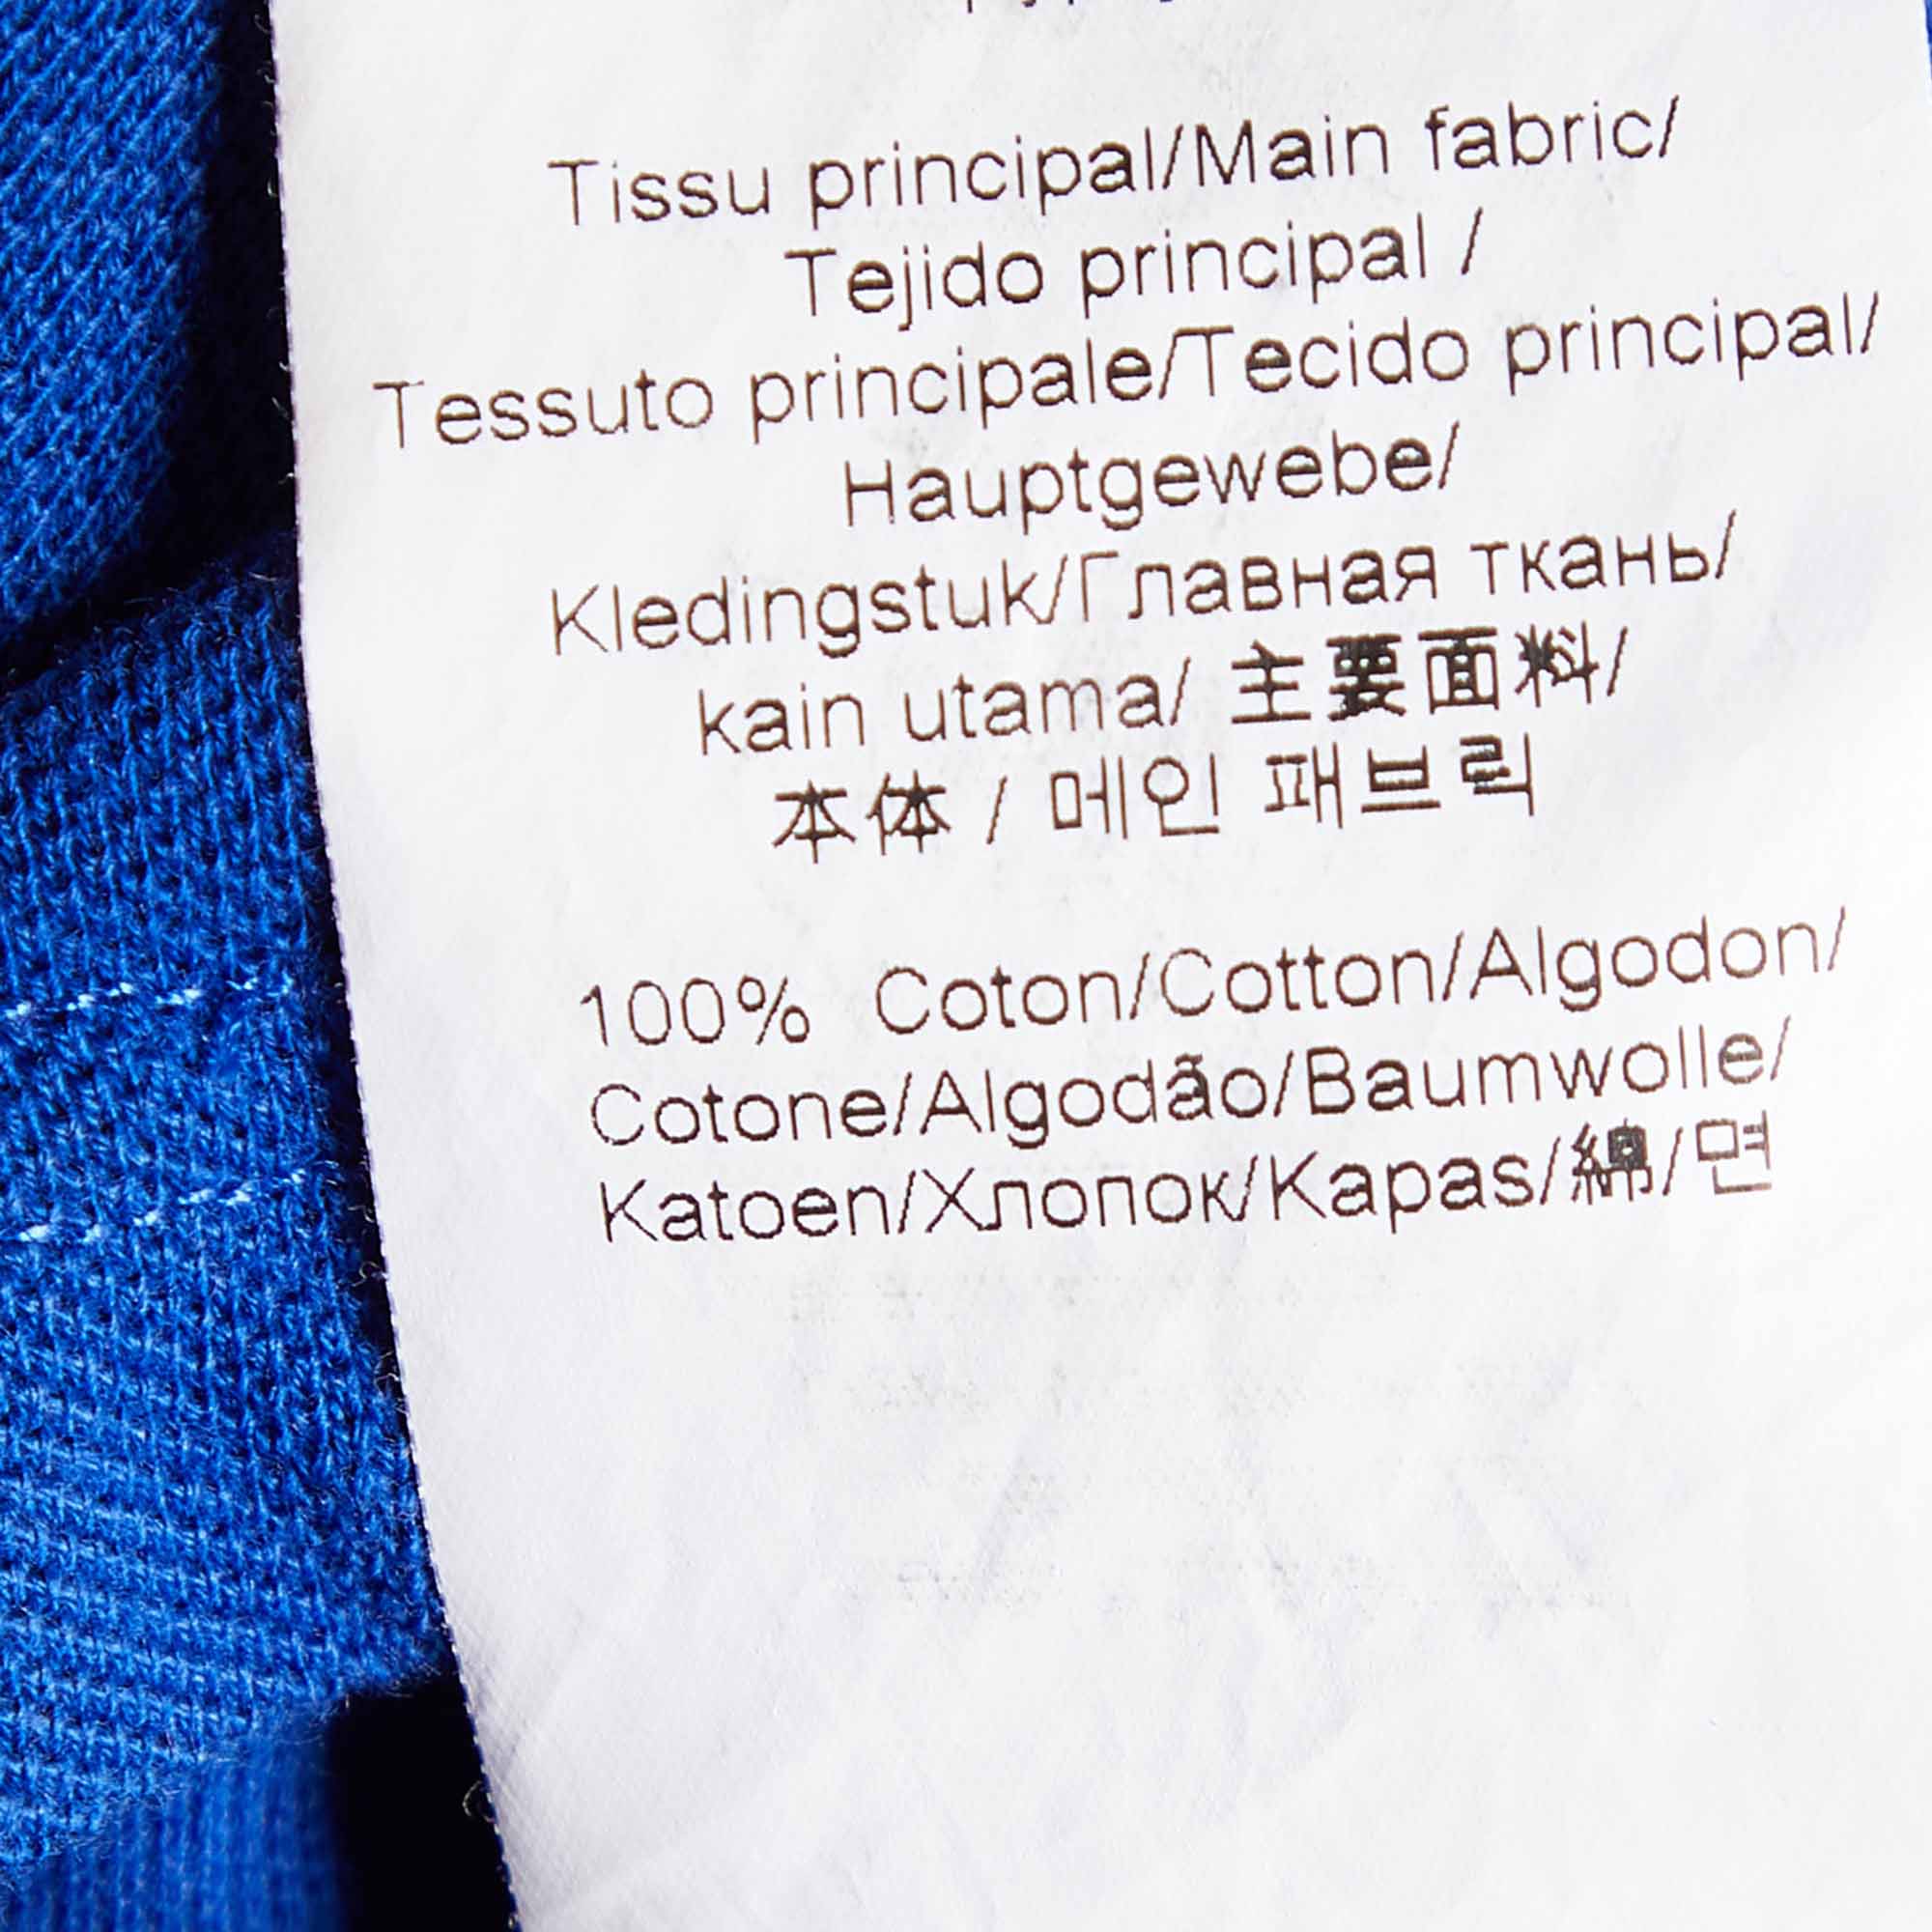 Kenzo Blue Cotton Pique Tiger Patch K-Fit Polo T-Shirt S